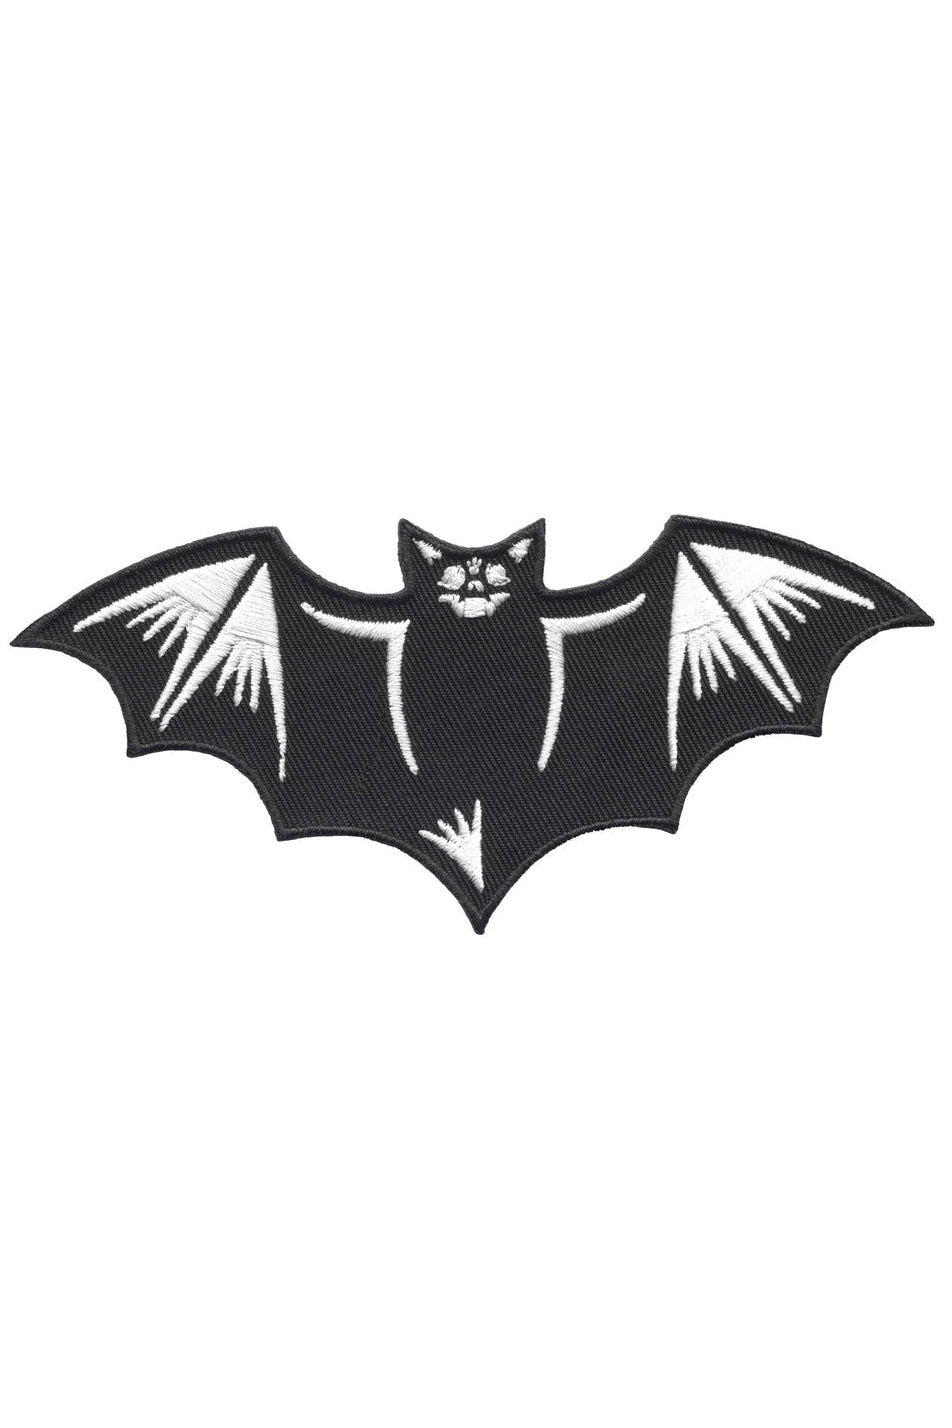 Nokturnal Bats Patch Set [BLACK/WHITE]